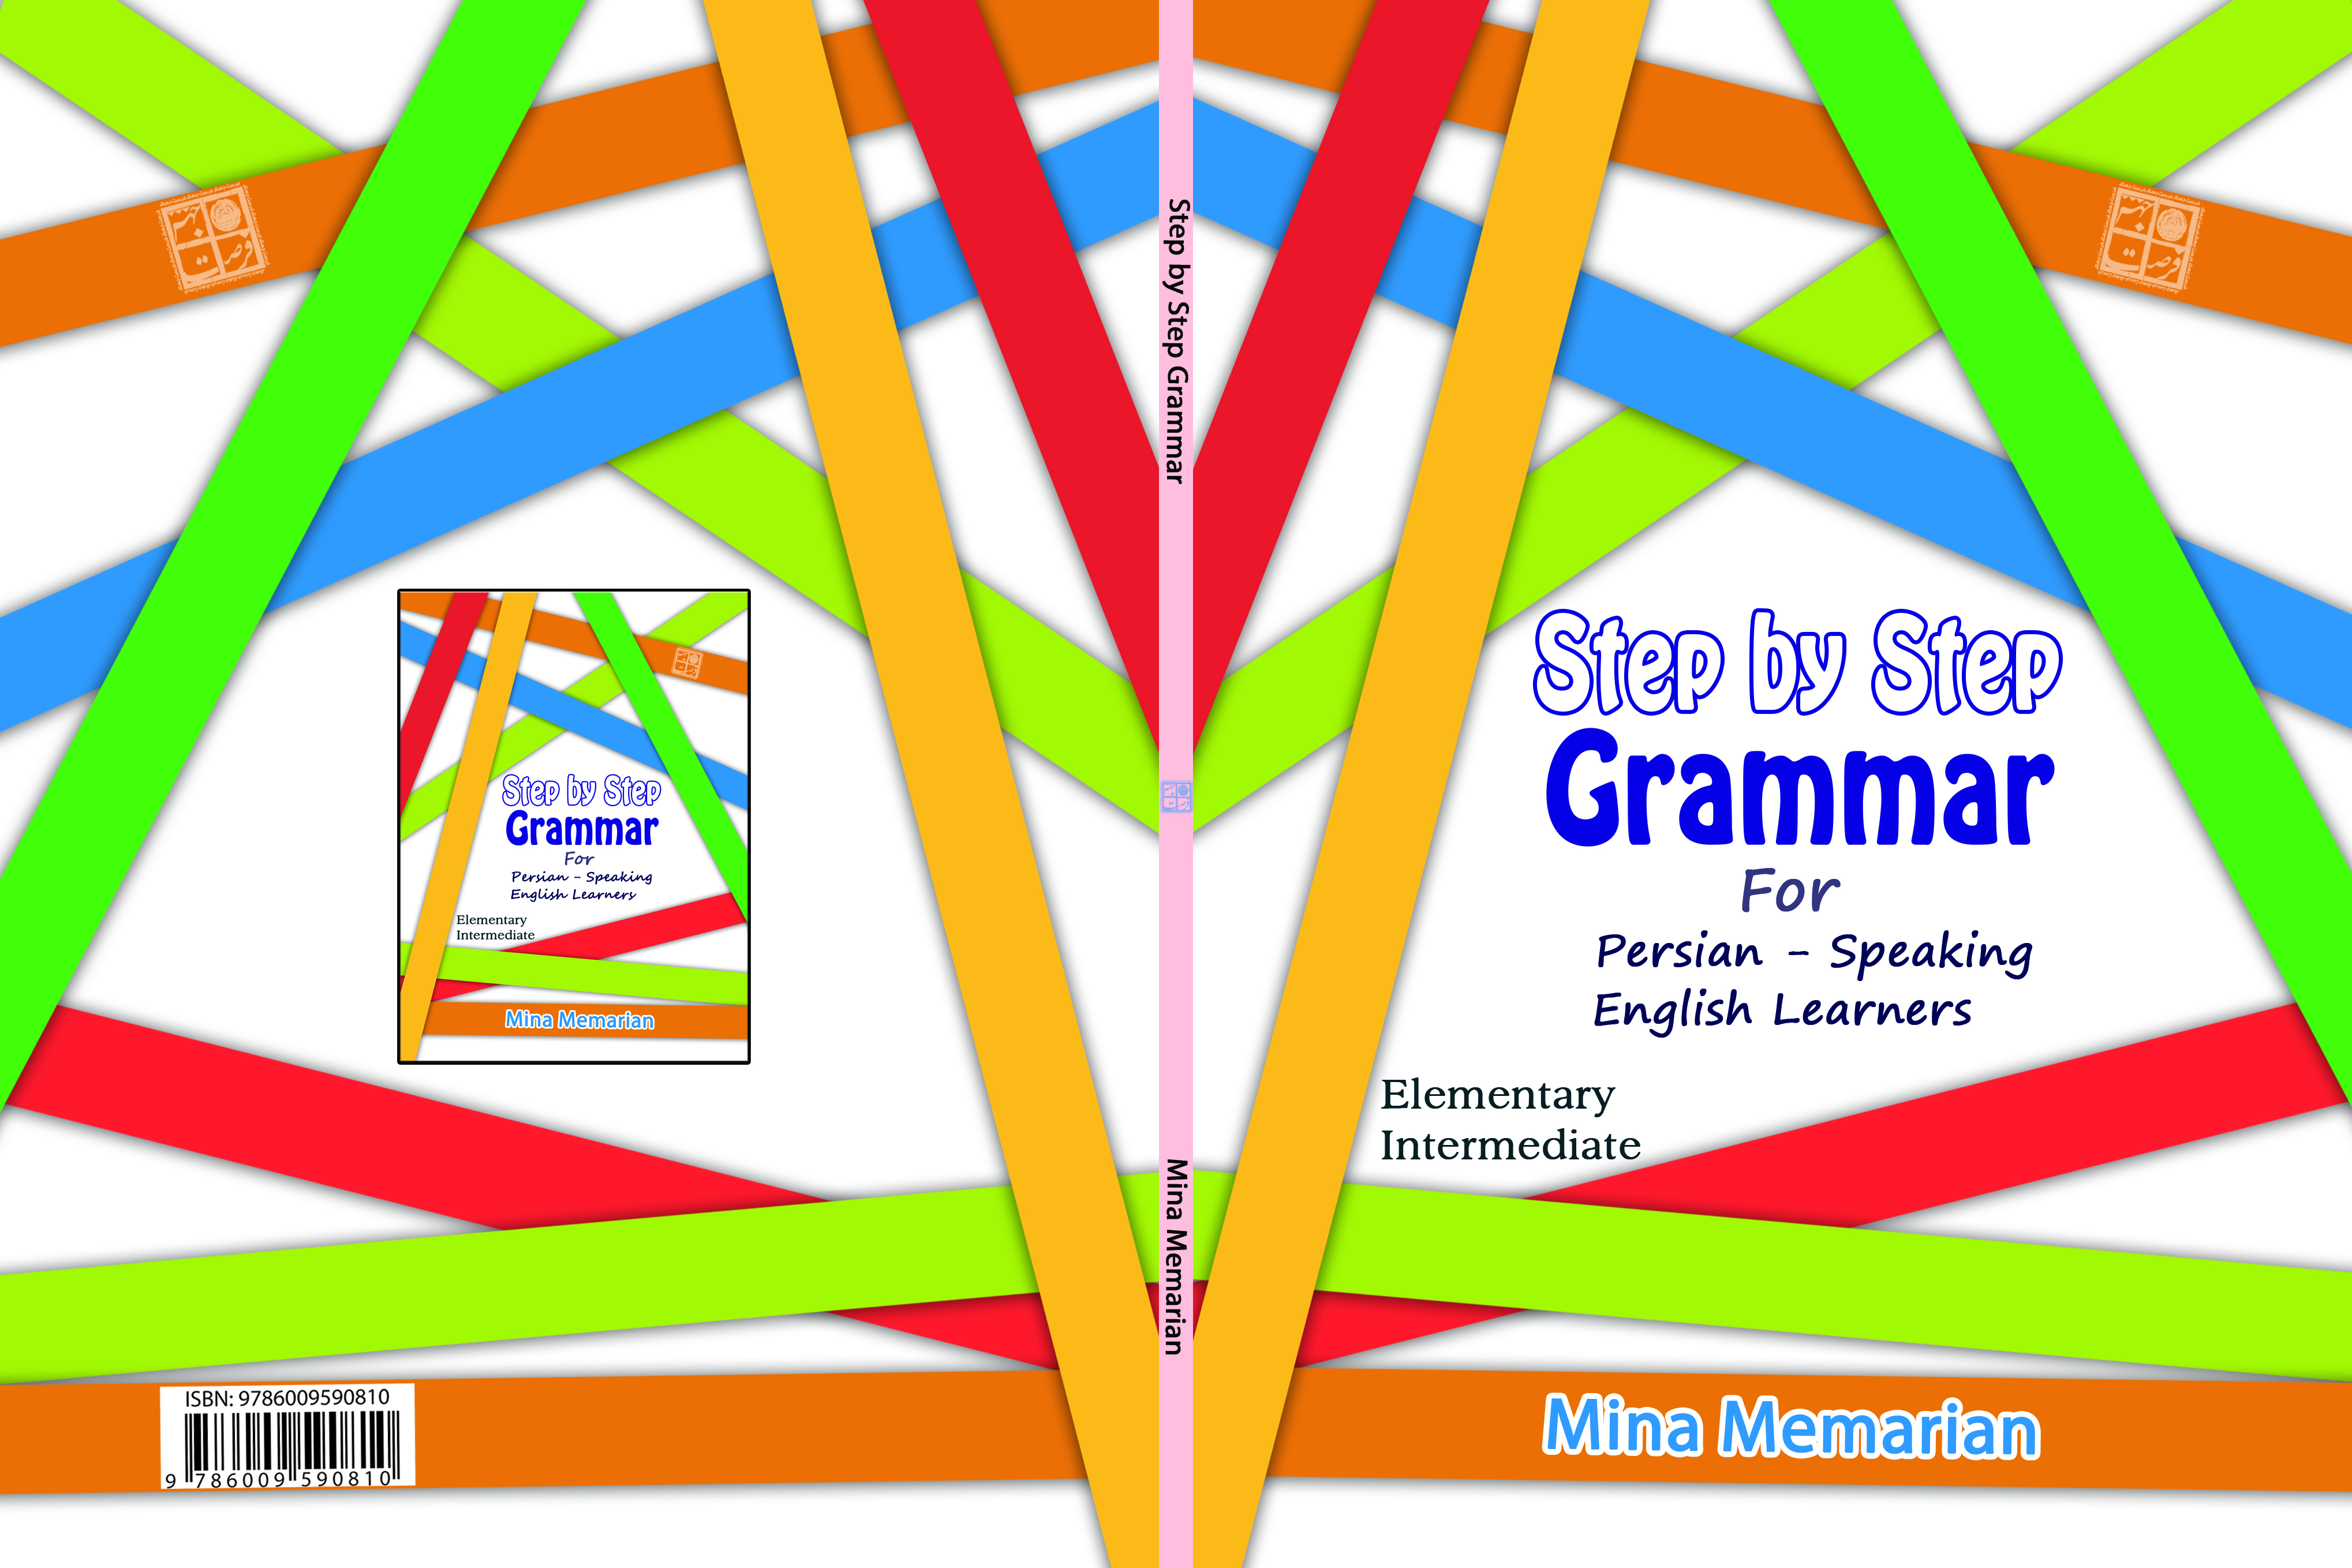 Step-by-step grammar